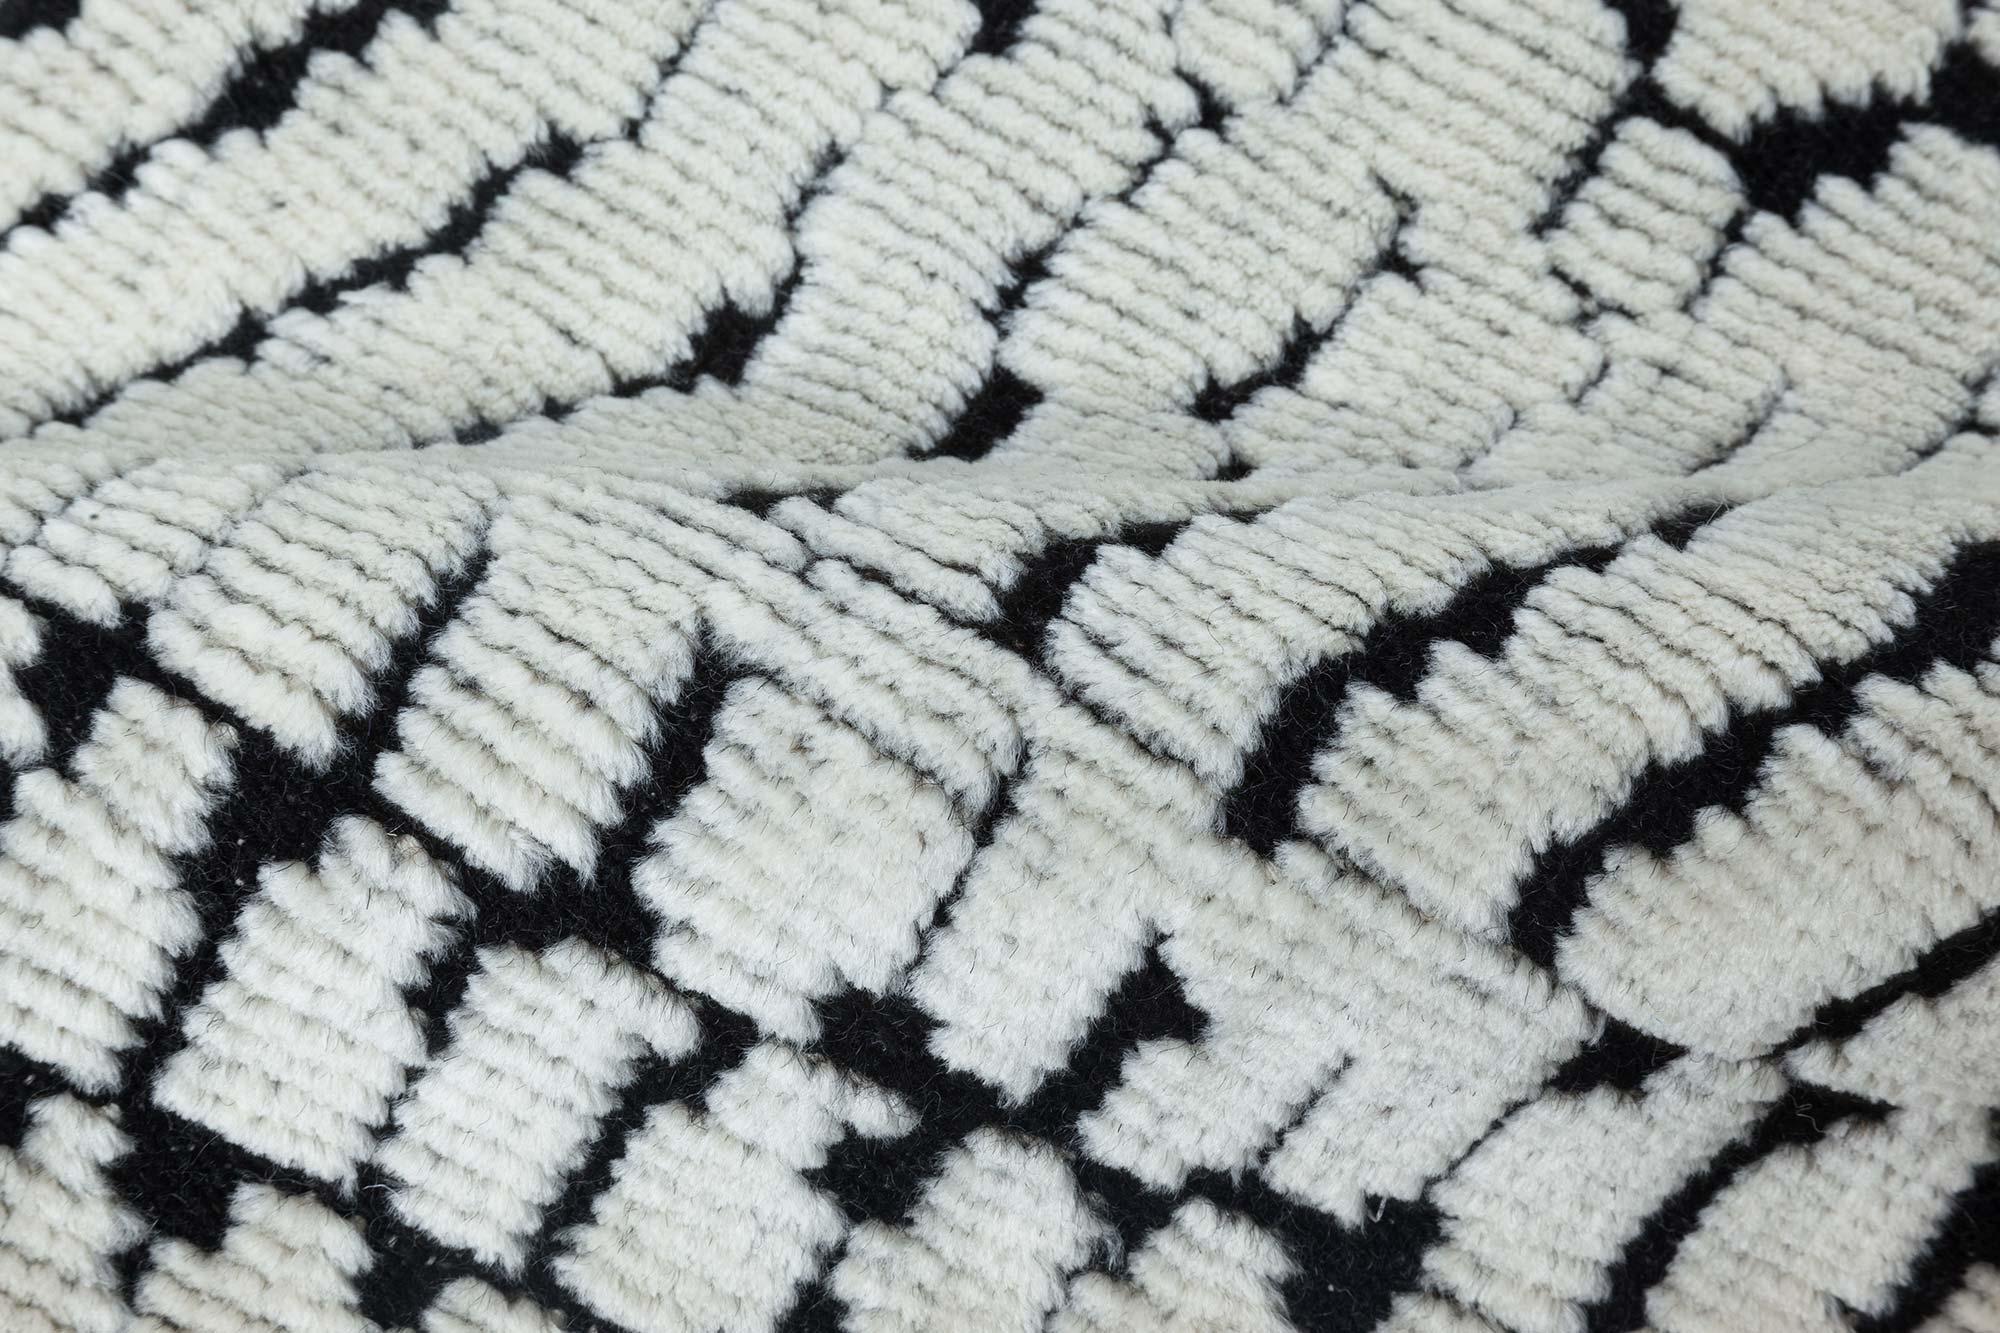 Contemporary 'Society' black and white handmade wool rug by Doris Leslie Blau.
Size: 13'4